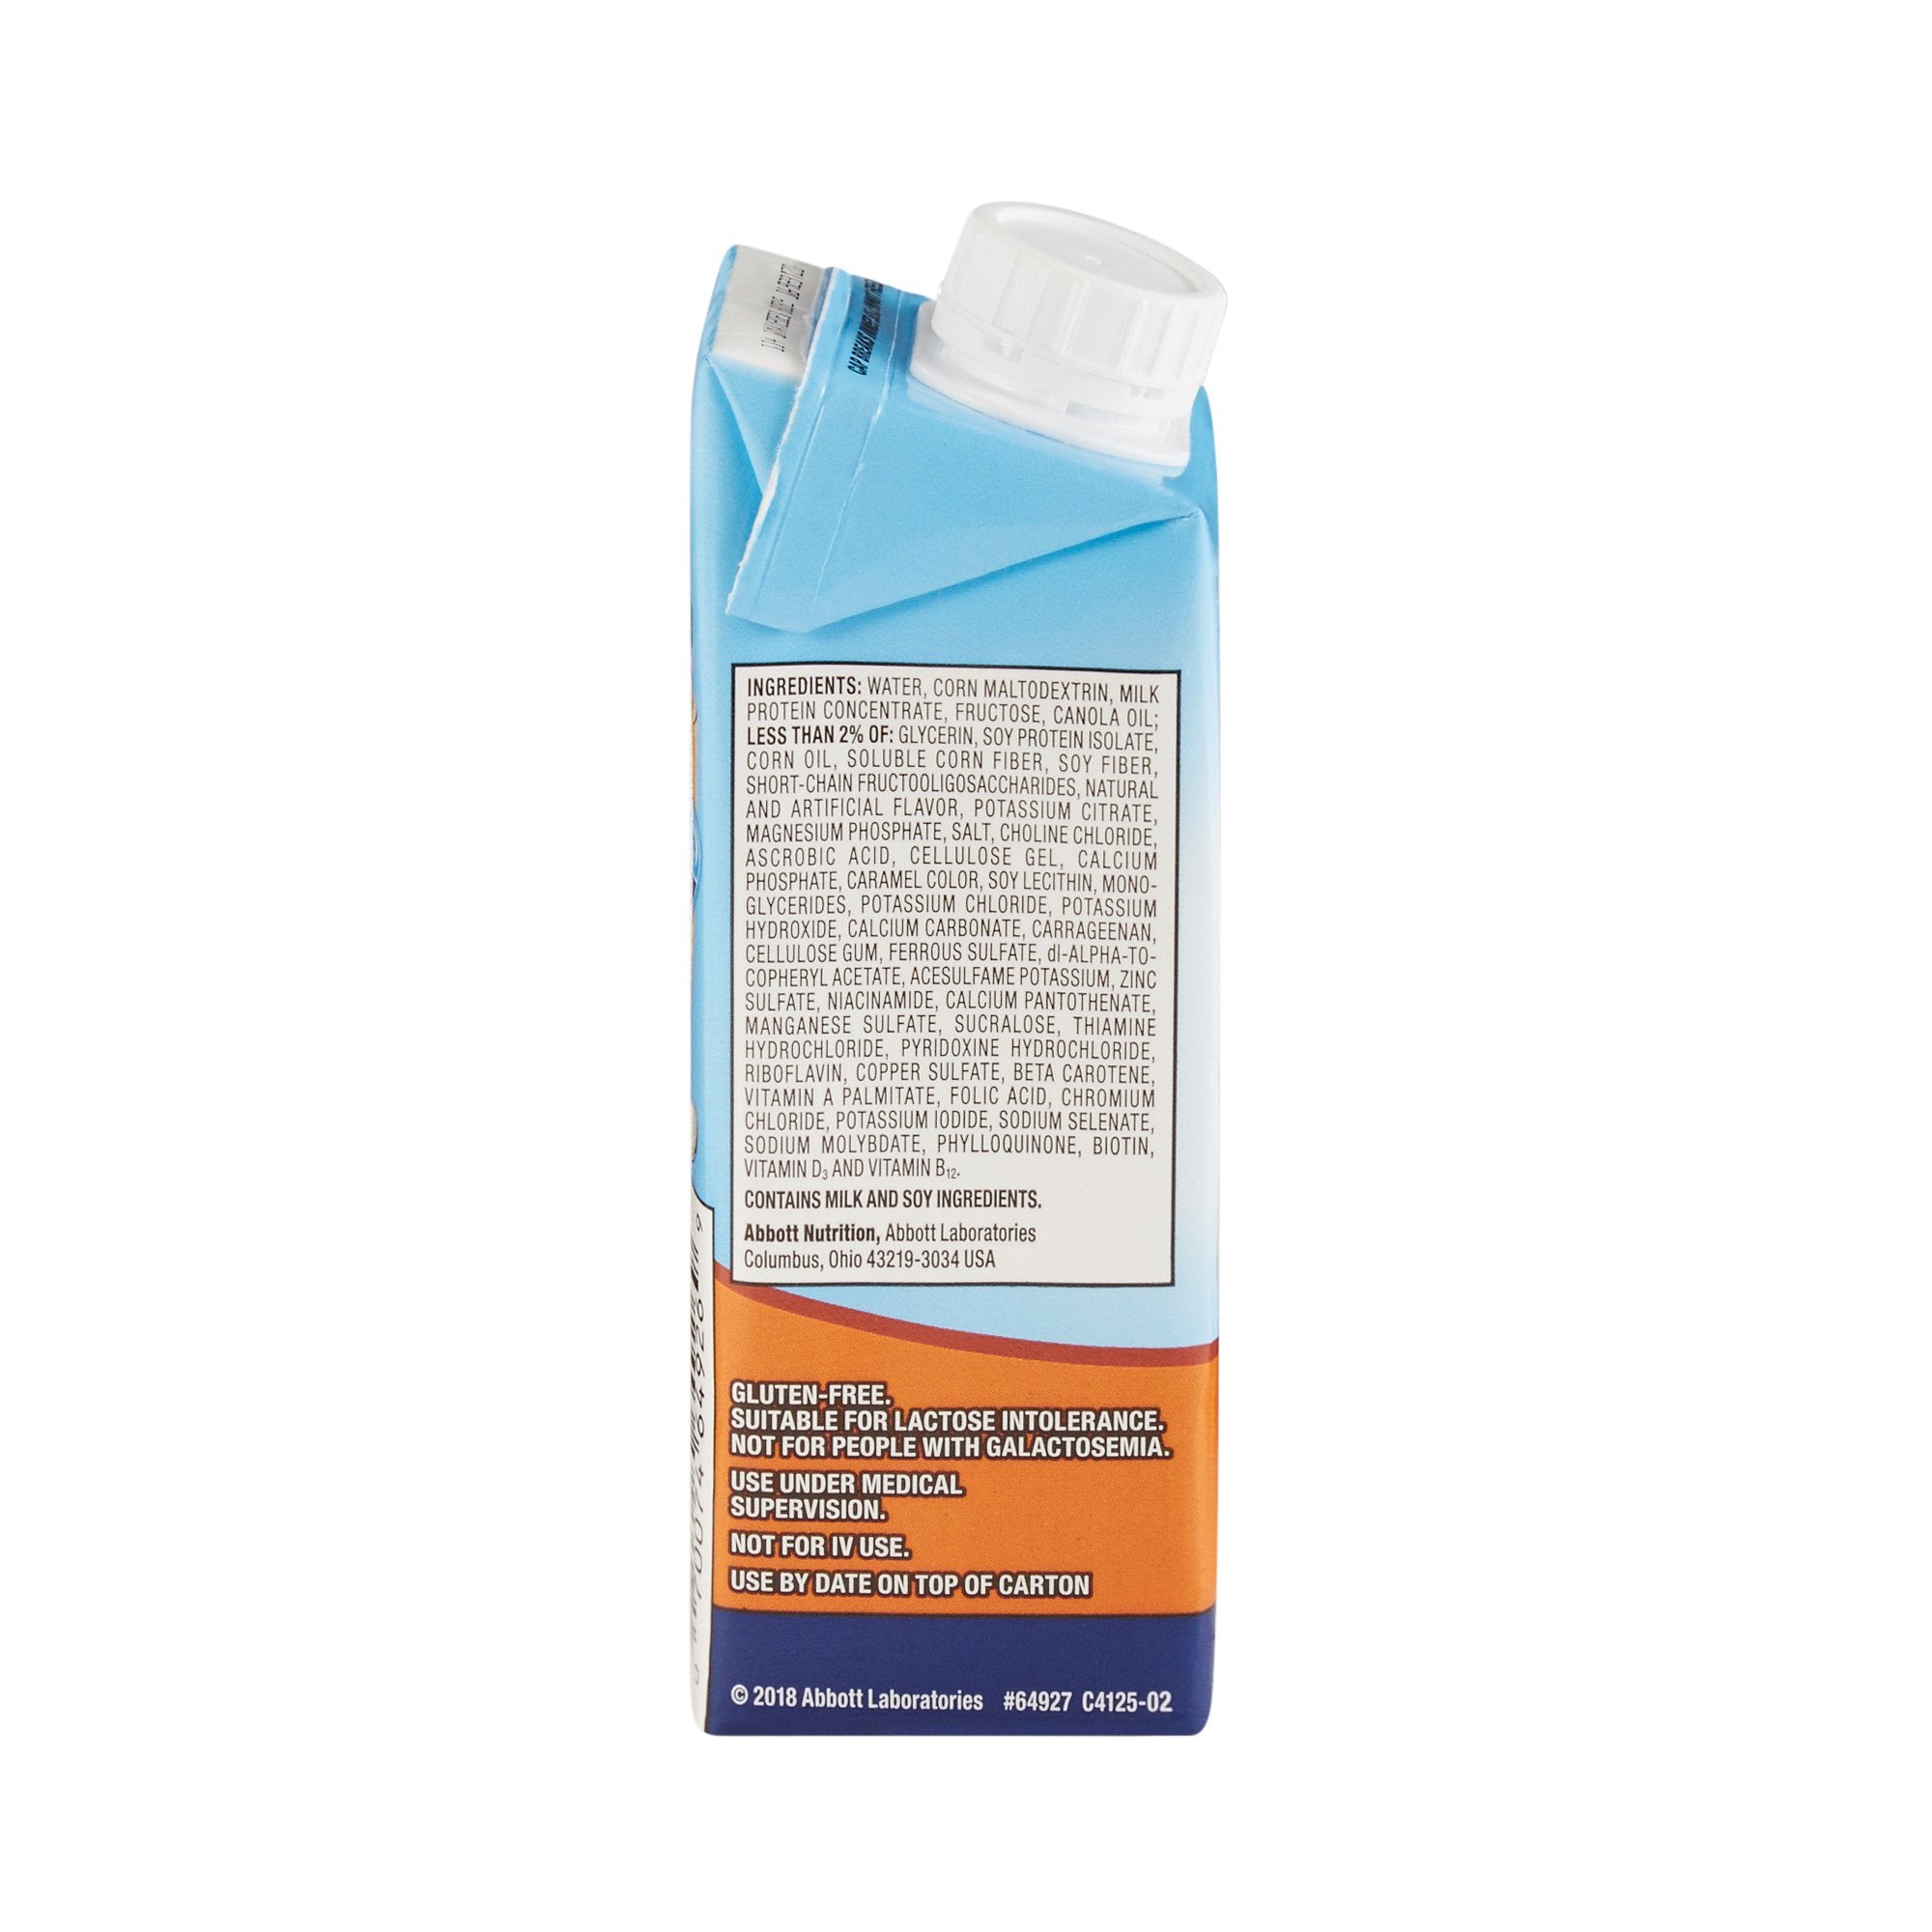 Oral Supplement Glucerna Therapeutic Nutrition Shake Butter Pecan Flavor Liquid 8 oz. Carton